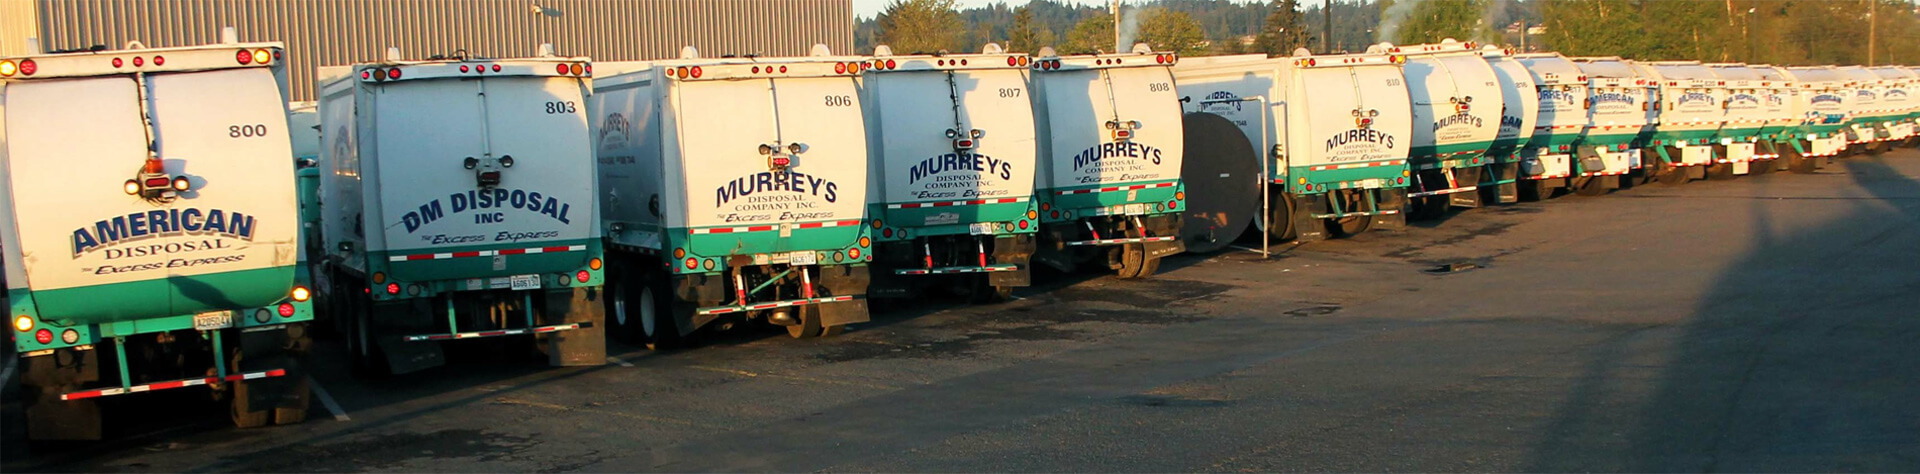 Waste Connections - Murrey Disposal waste hauling trucks.